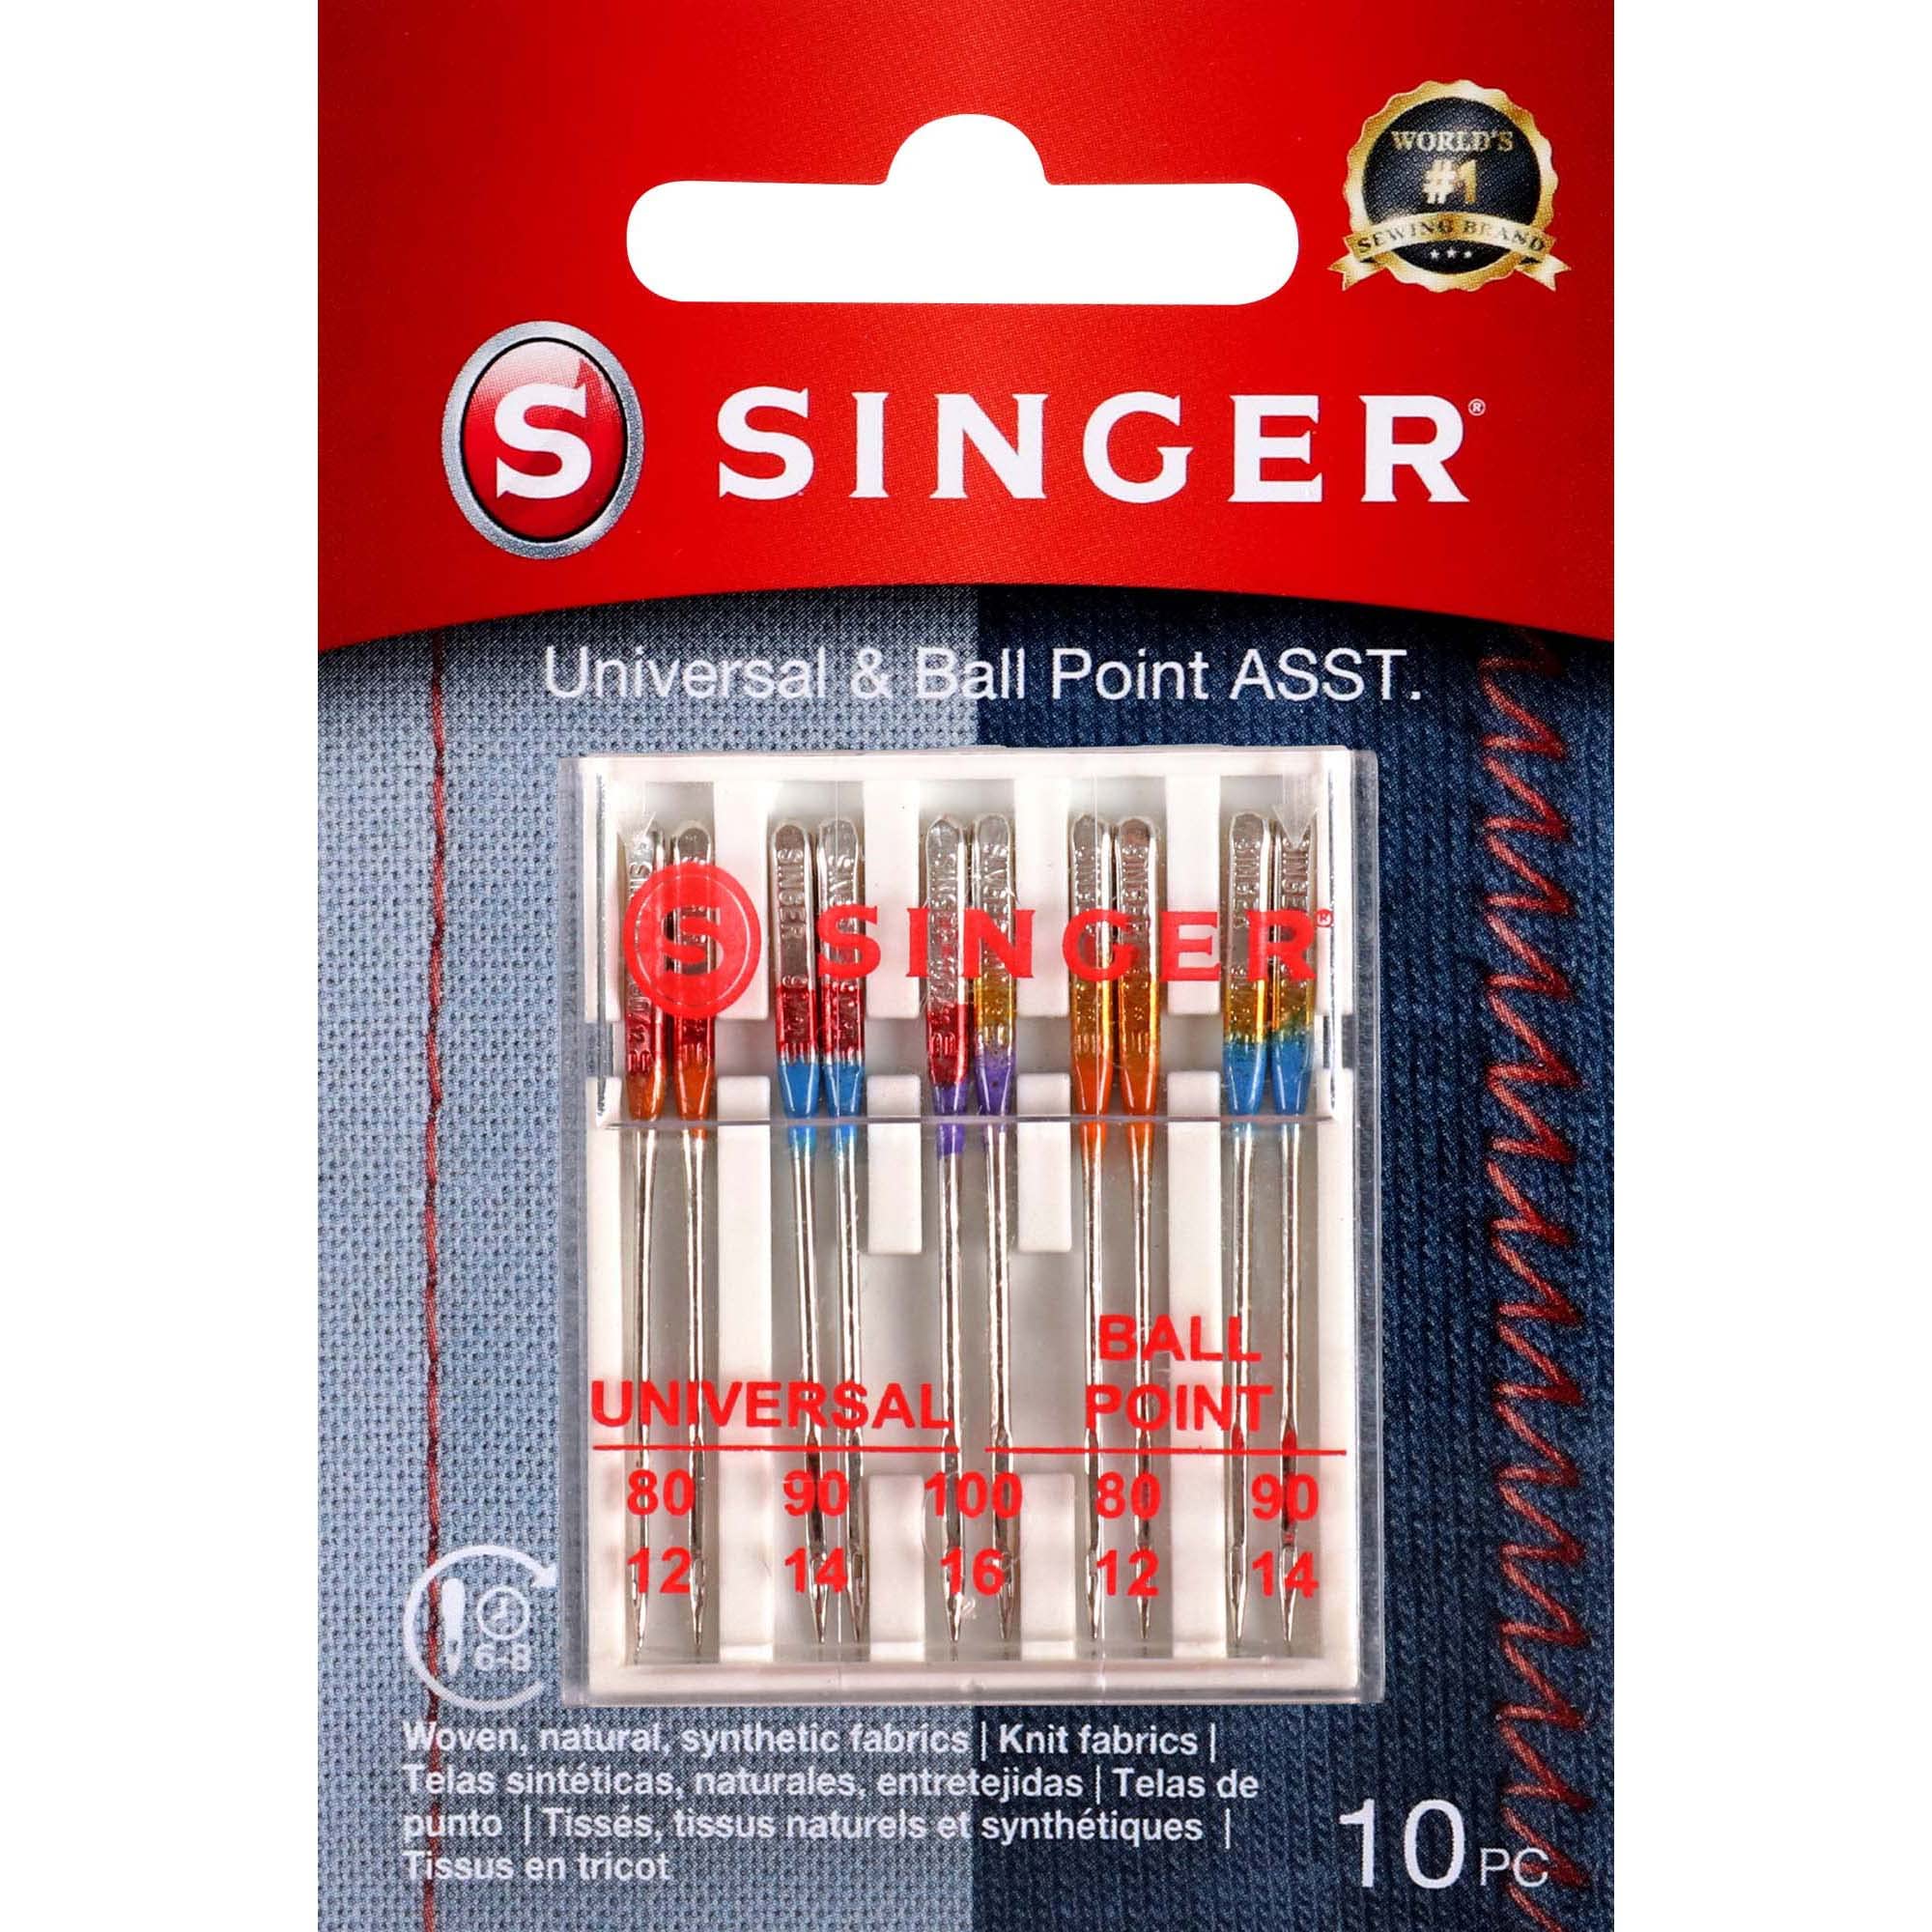 SINGER Universal Regular & Ball Point Sewing Machine Needles, Sizes 80/12, 90/14, 100/16 - 10 Count